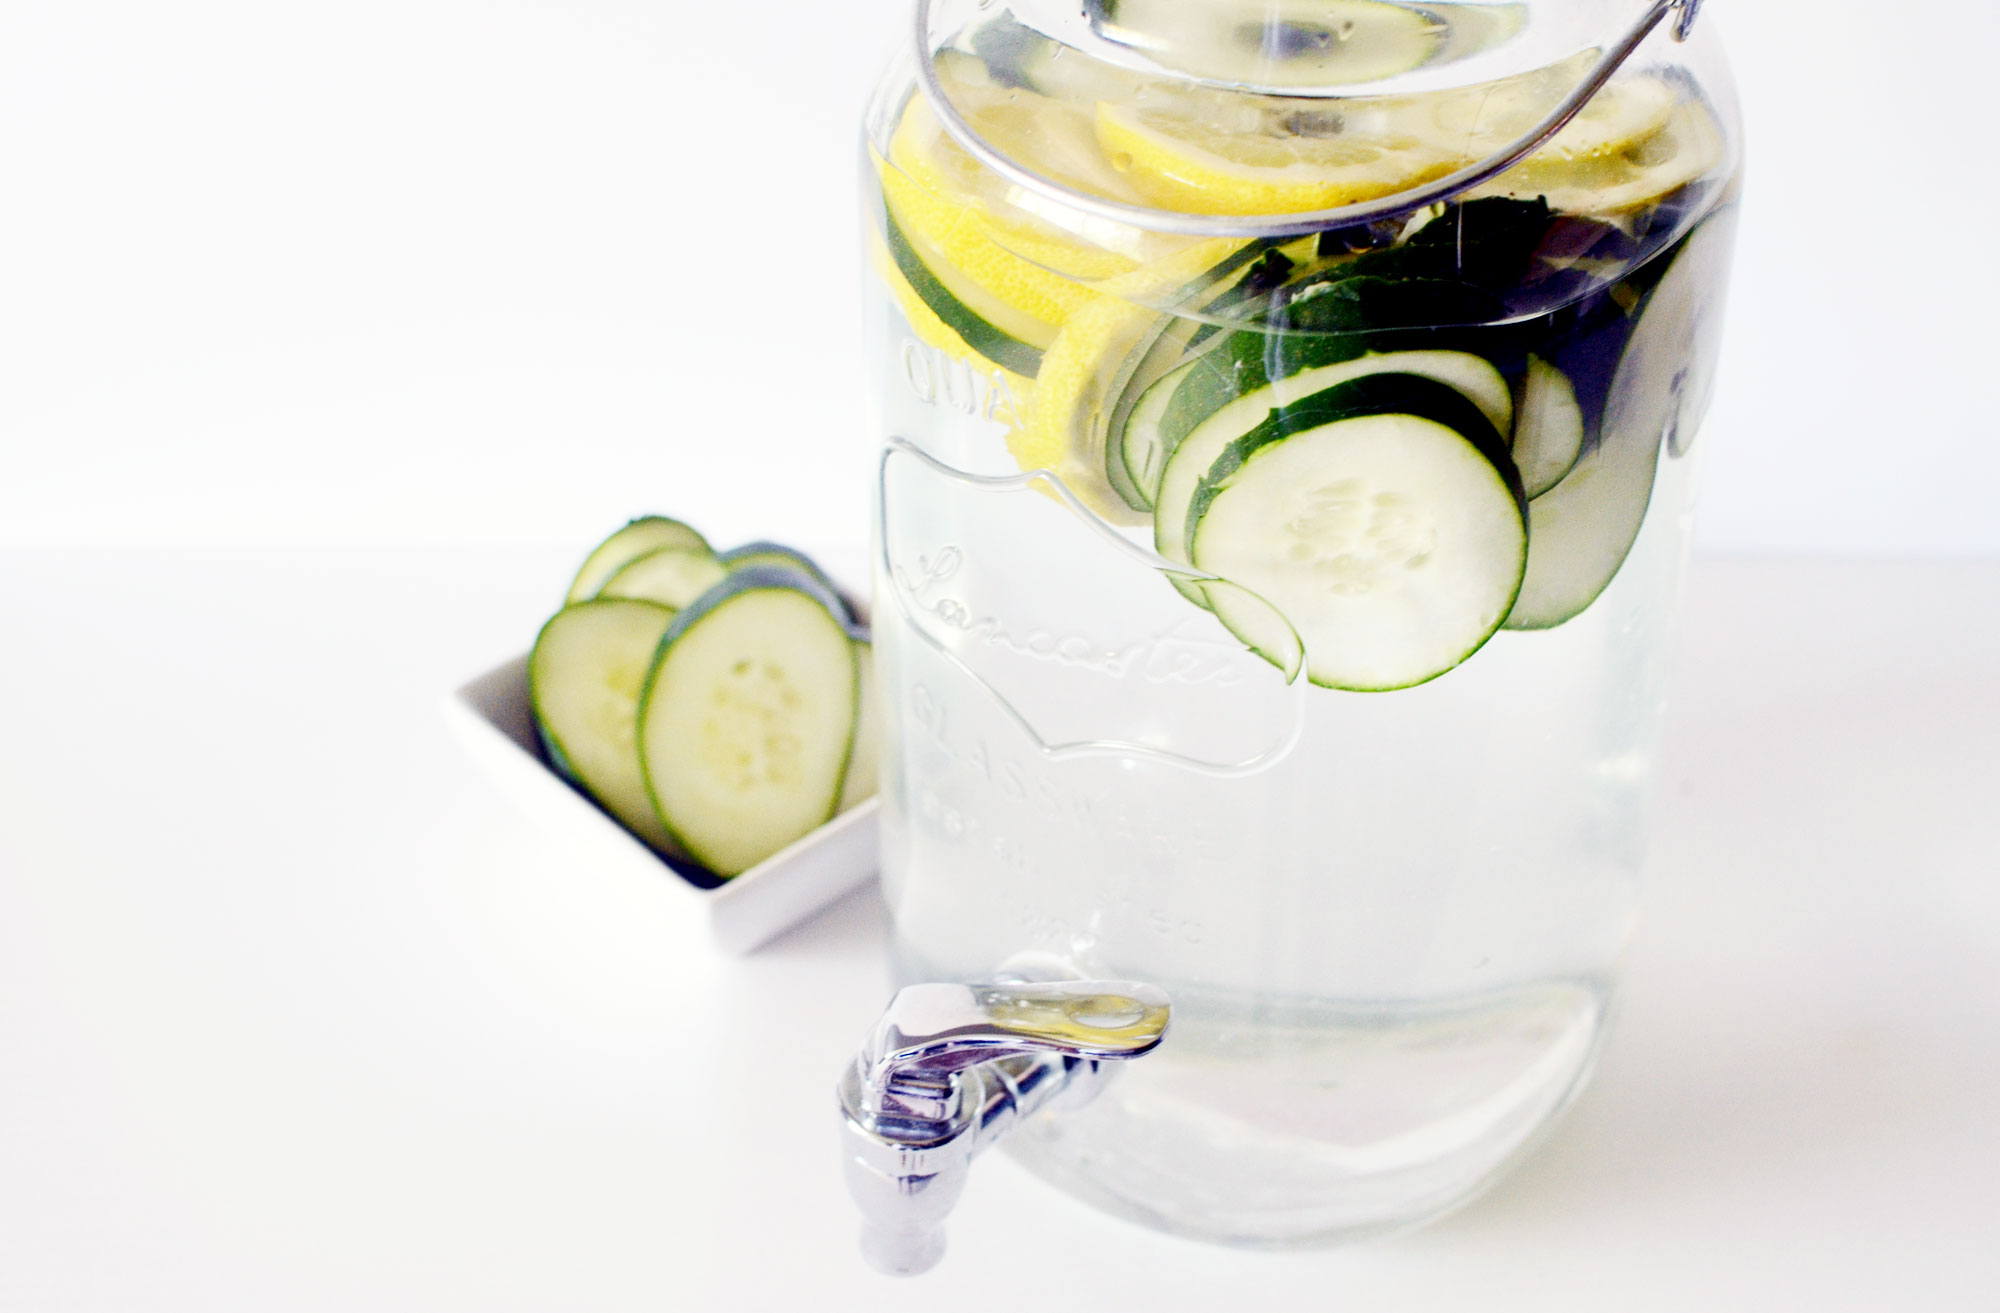 Cucumber lemon water